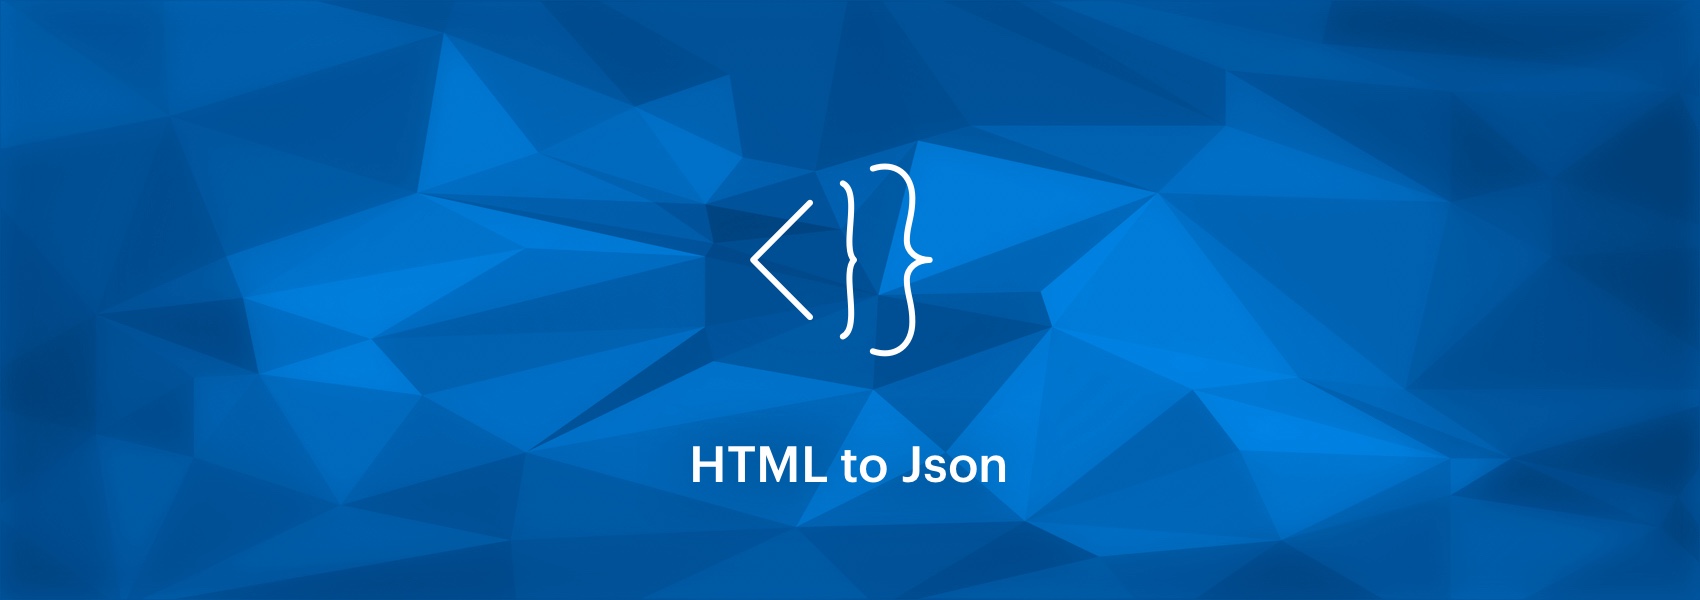 html-to-json.jpg